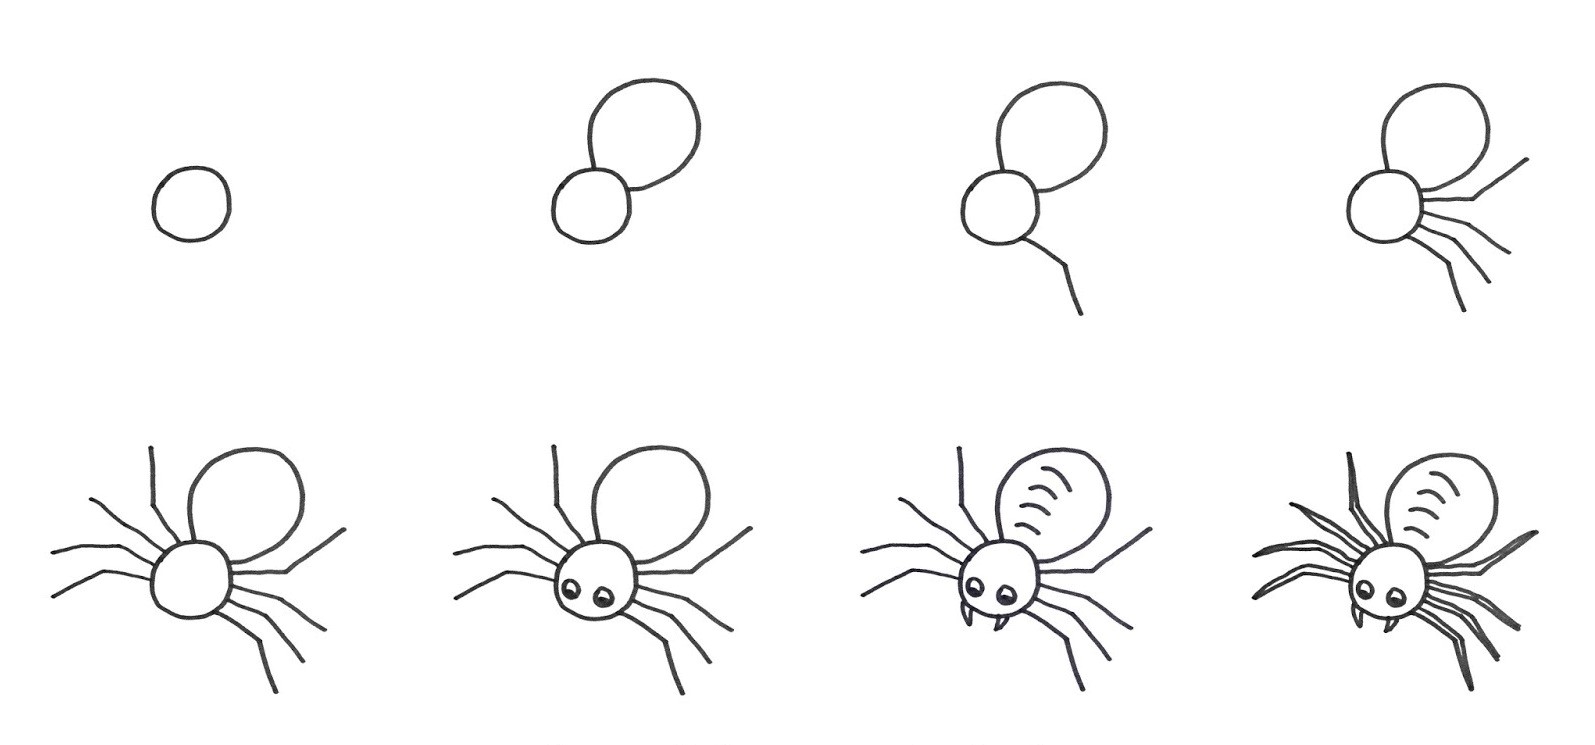 Spider idea 7 Drawing Ideas